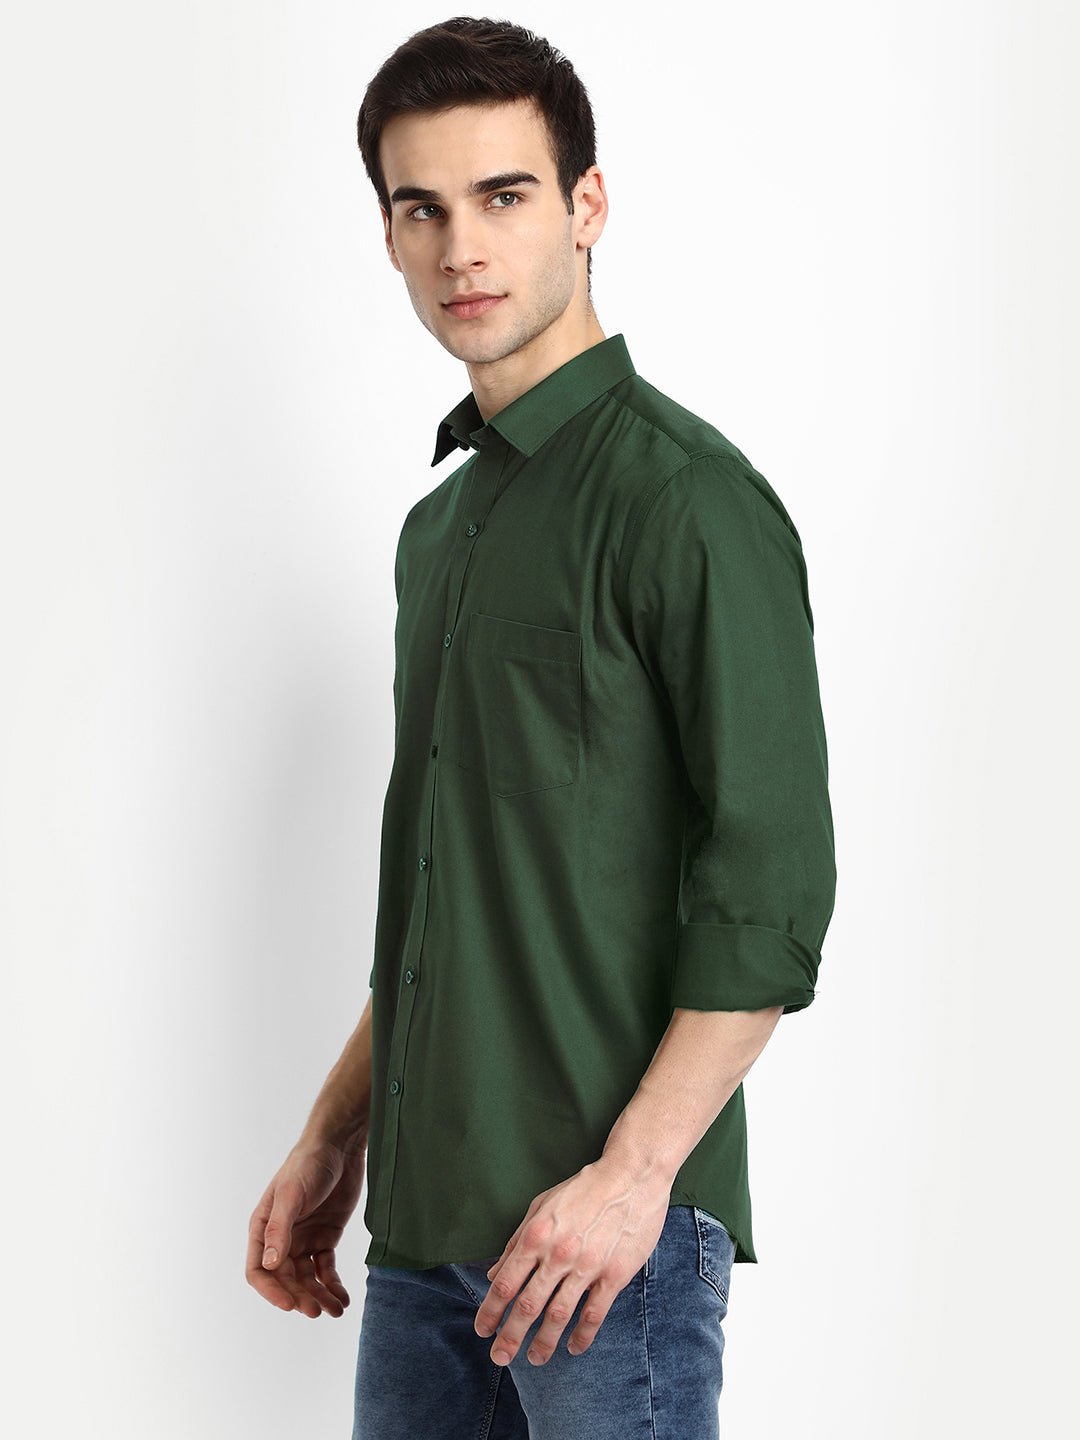 Punekar Cotton Mehandi Color 100% Mercerised Cotton Diagonally Woven Formal Shirt for Men&